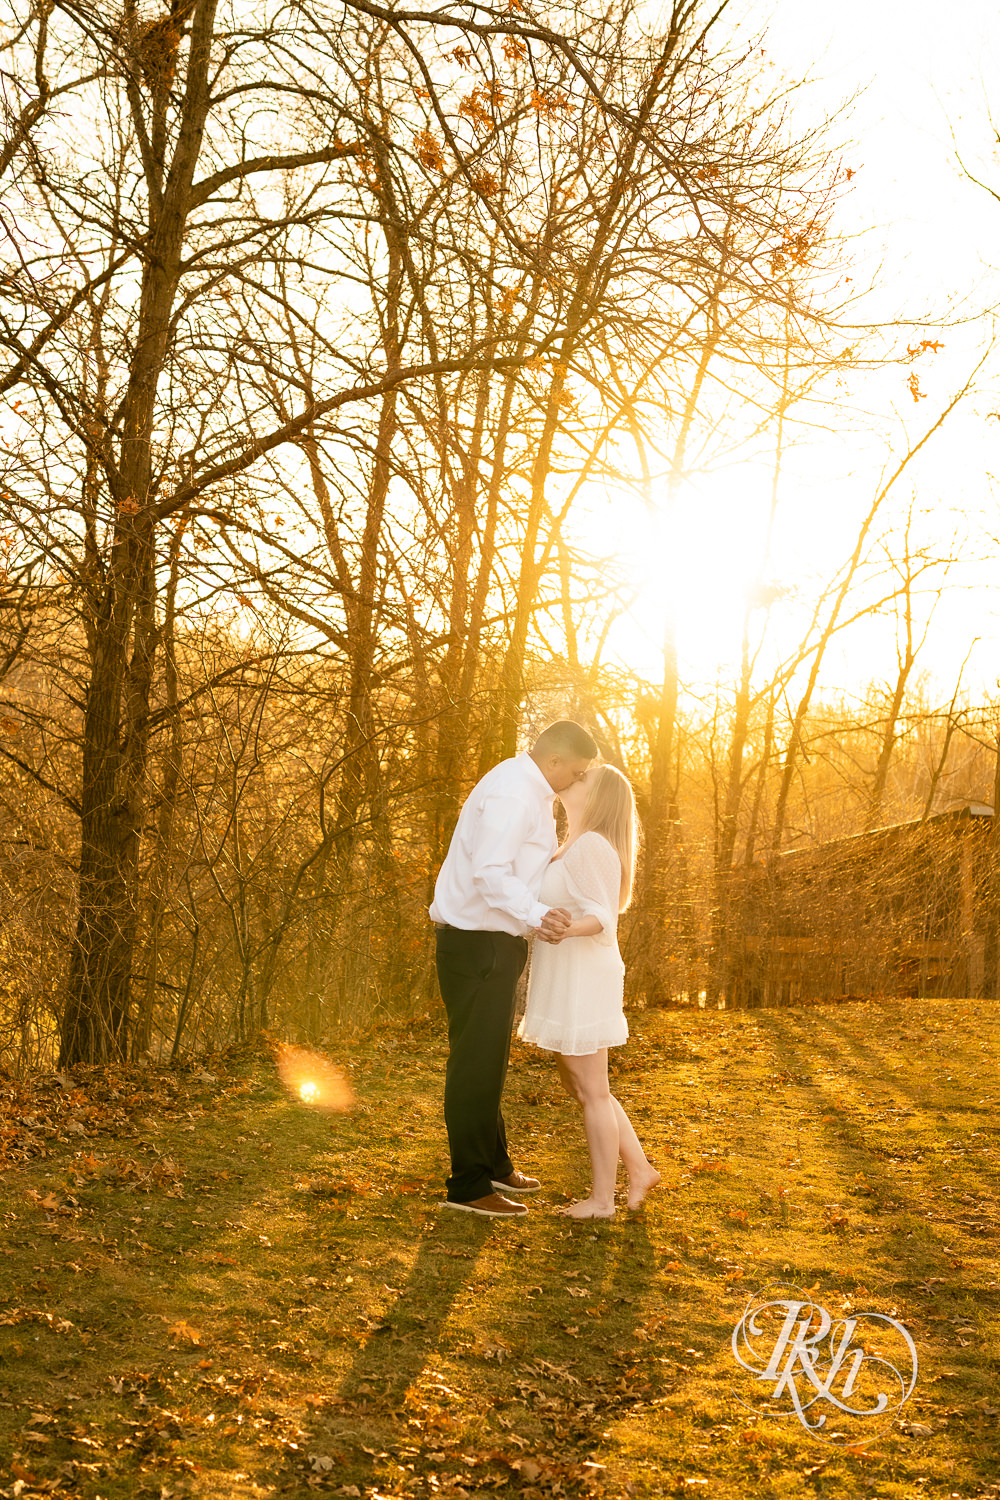 Filipino man and woman in white dress kiss during sunset at Lebanon Hills in Eagan, Minnesota.